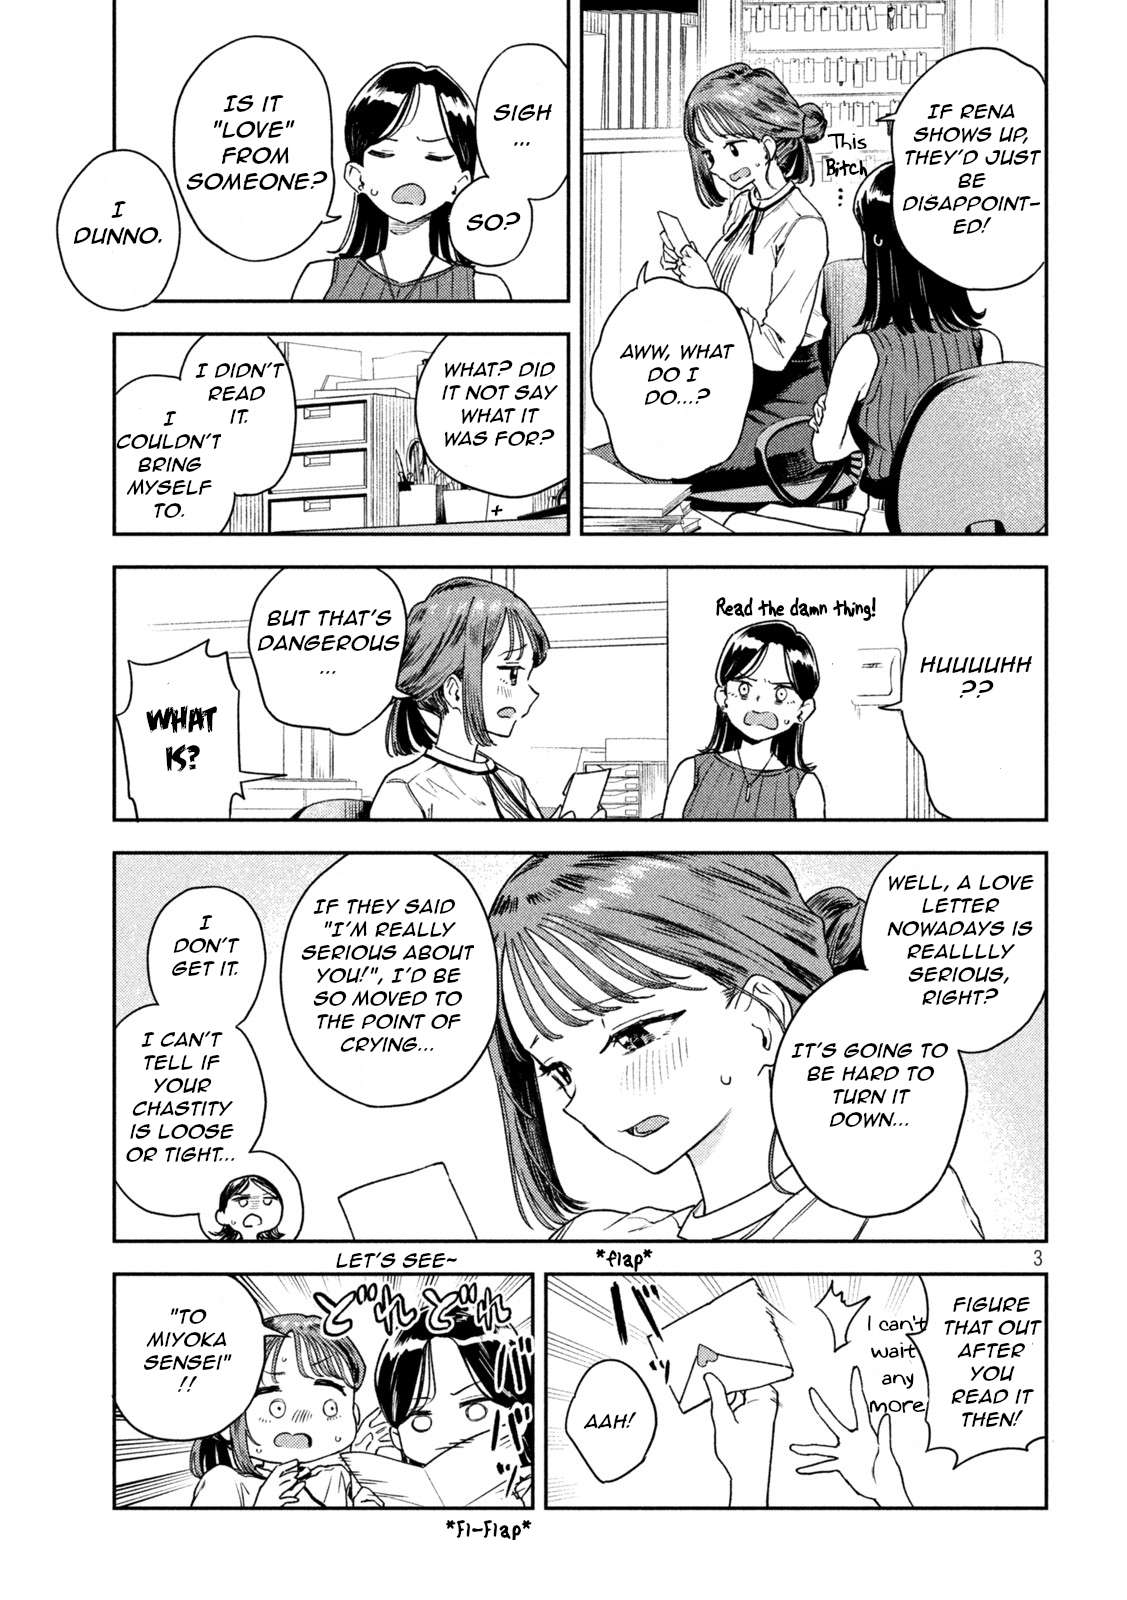 Miyo-Chan Sensei Said So - chapter 5 - #3